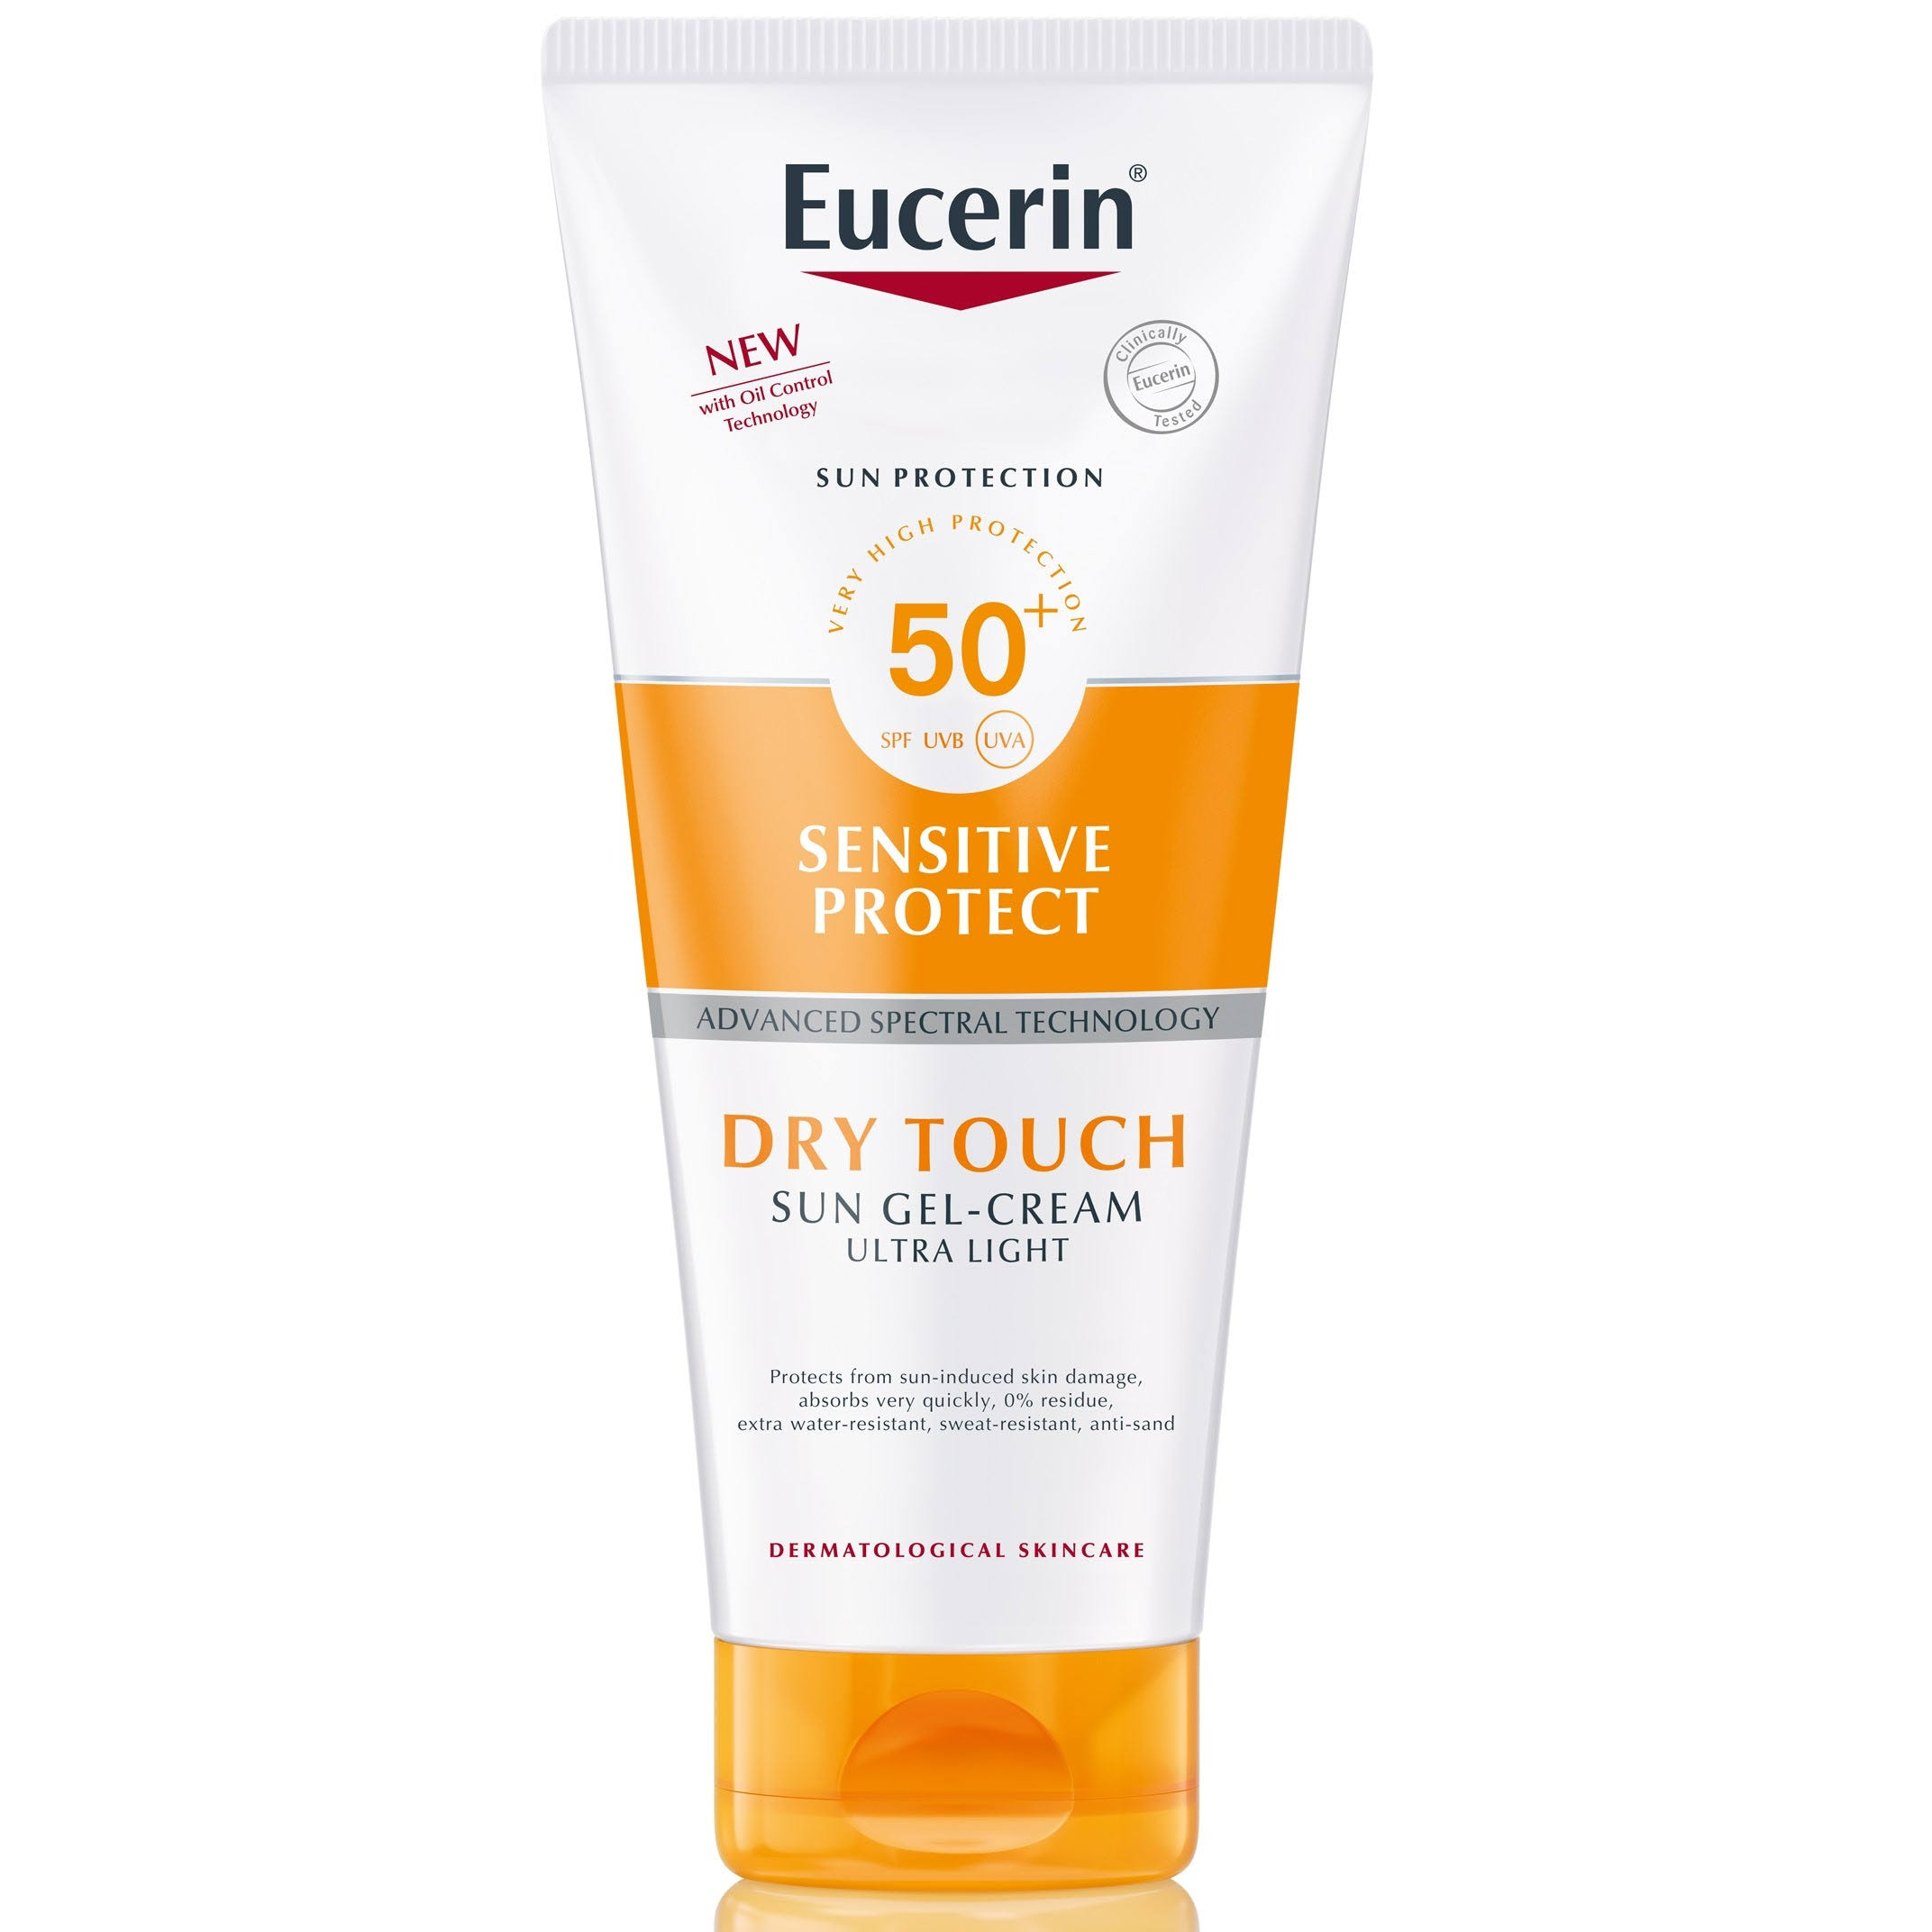 Eucerin Sun Gel-Cream Dry Touch Sensitive Protect SPF50+ 200ml